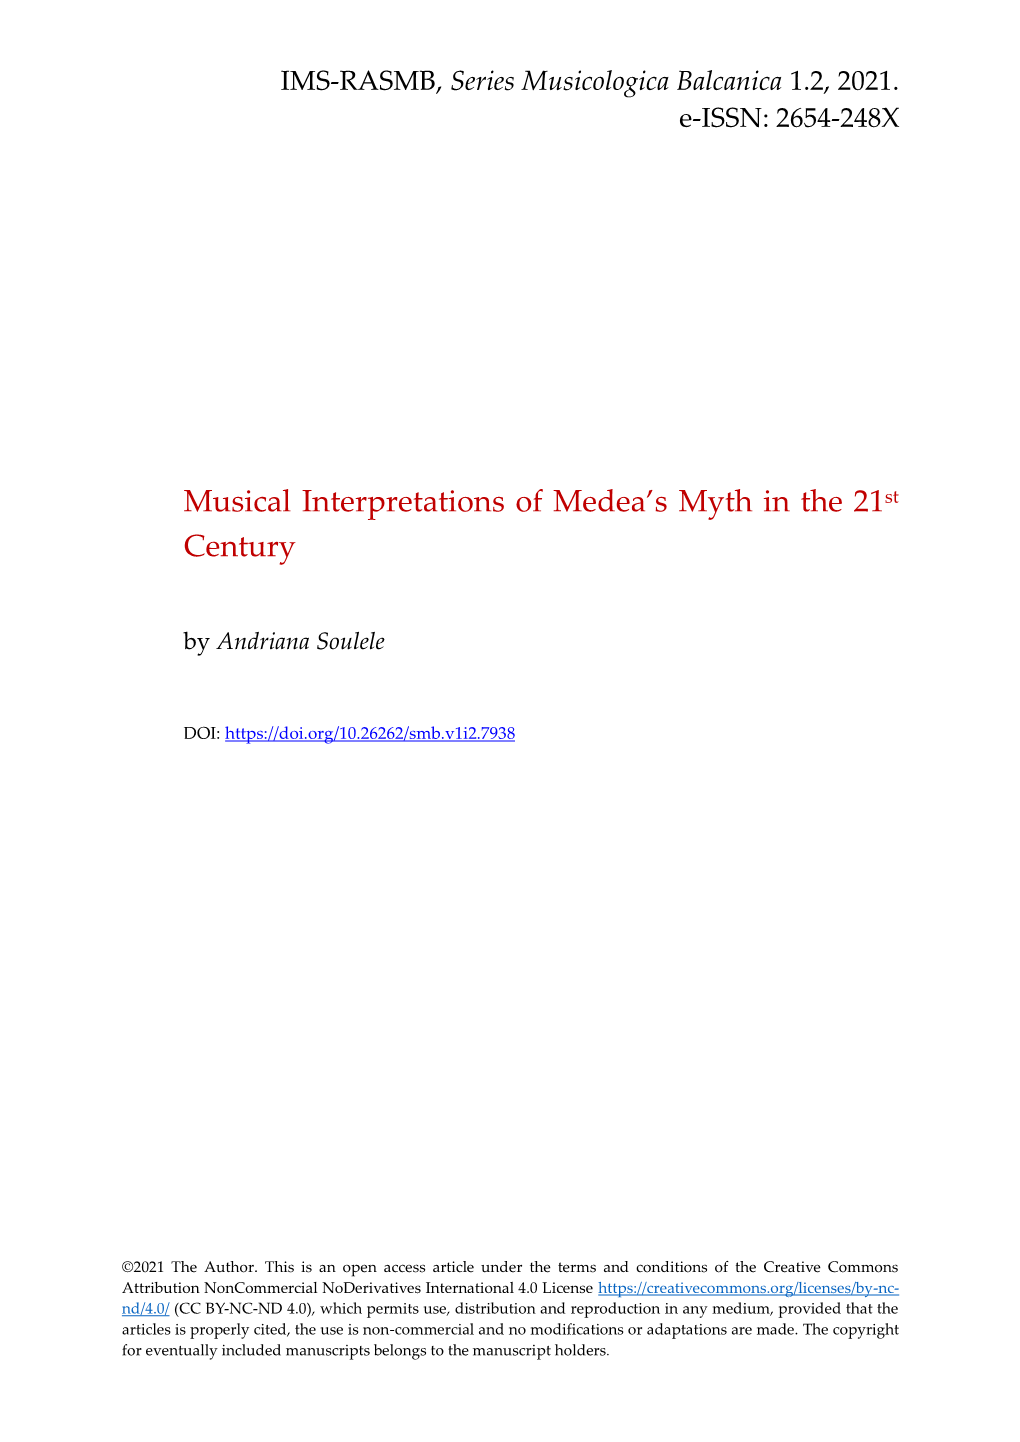 Musical Interpretations of Medea's Myth in the 21St Century